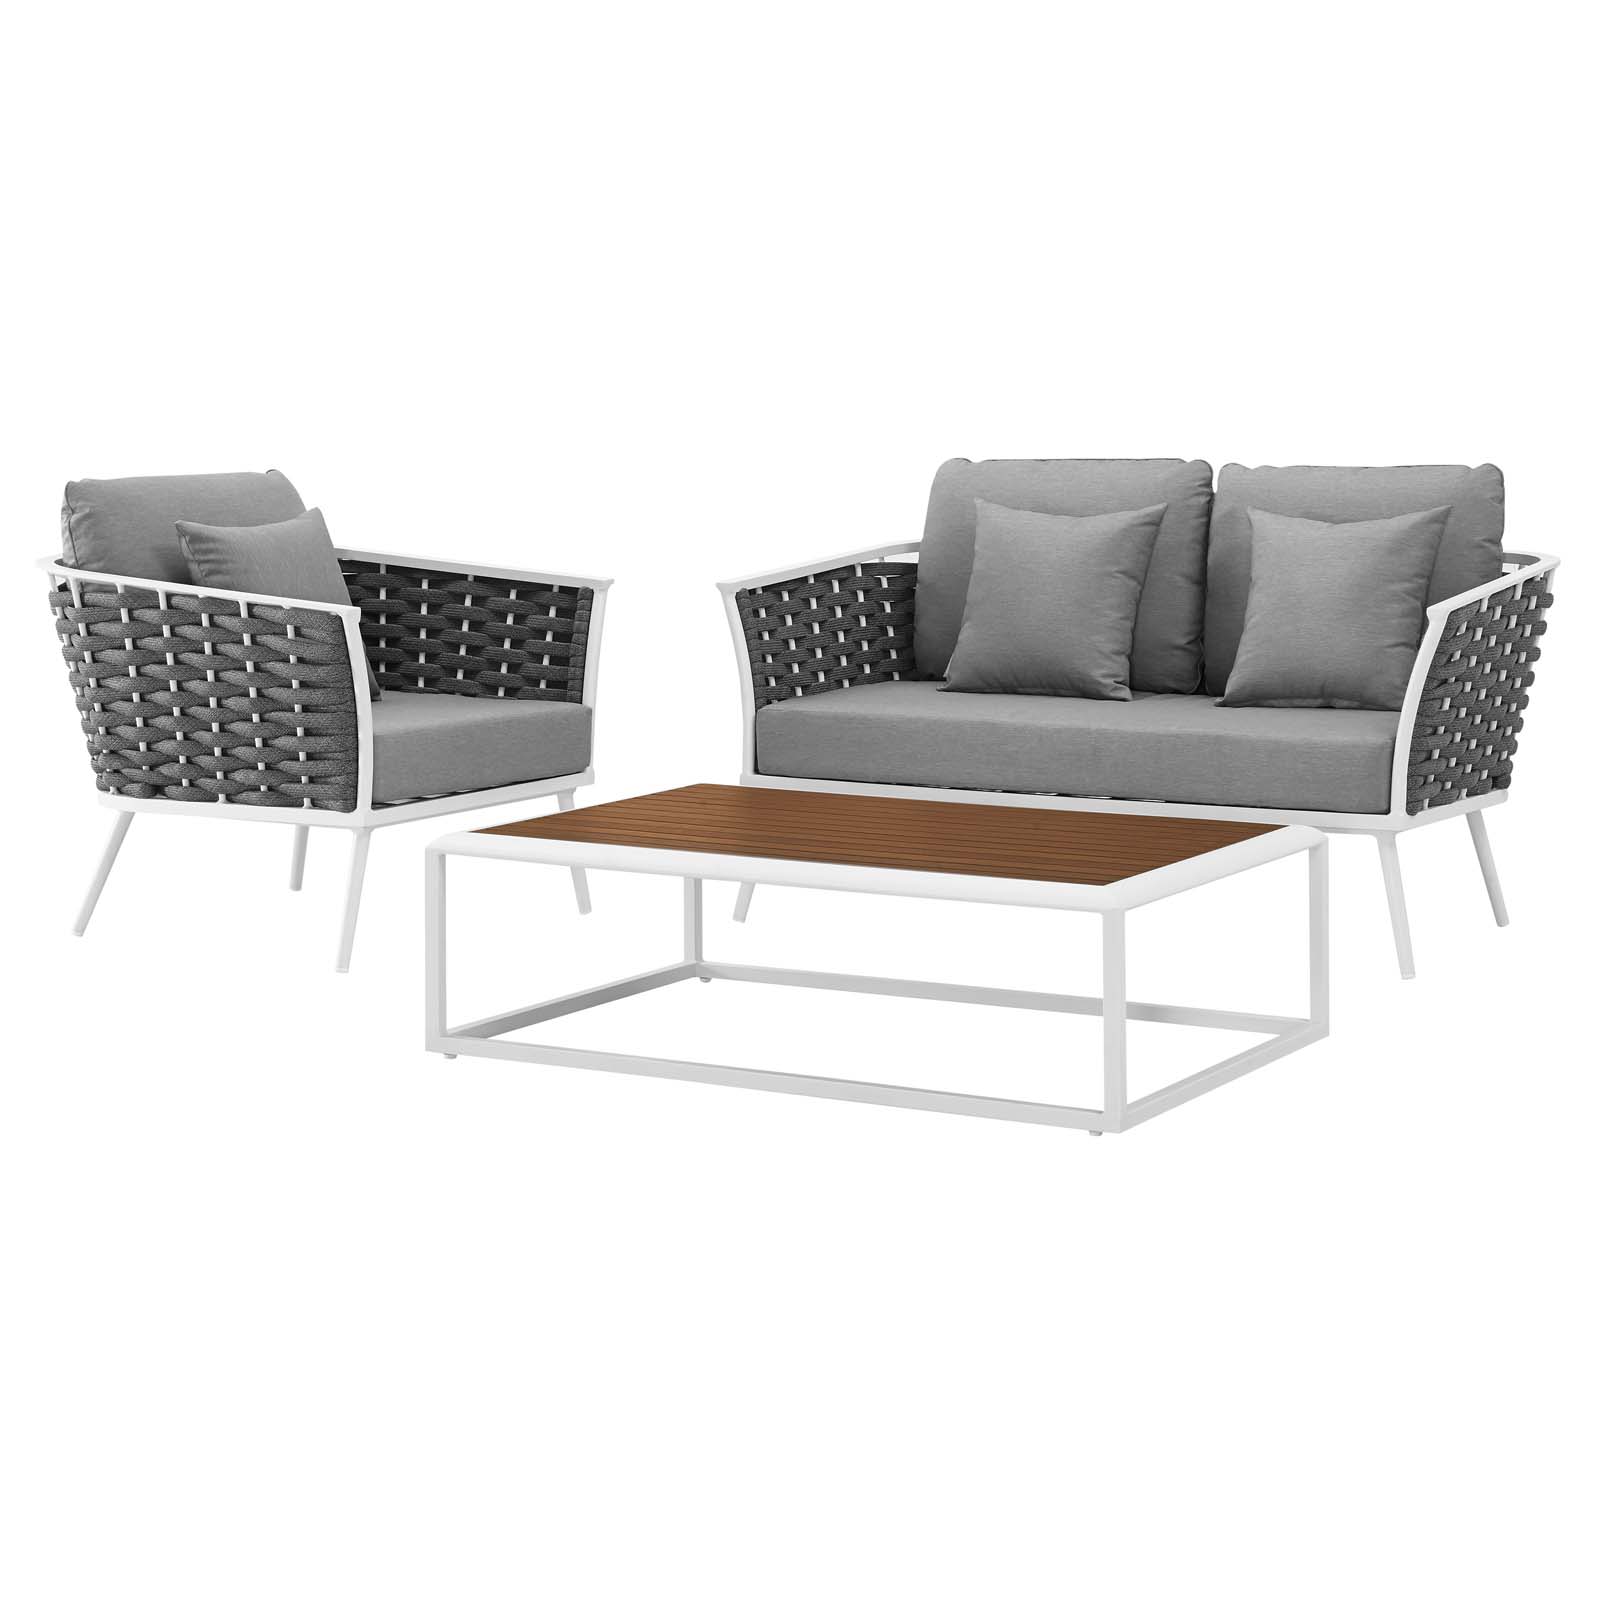 Modern Contemporary Urban Design Outdoor Patio Balcony Garden Furniture Lounge Chair and Sofa Set, Fabric Aluminium, White Grey Gray - image 1 of 8